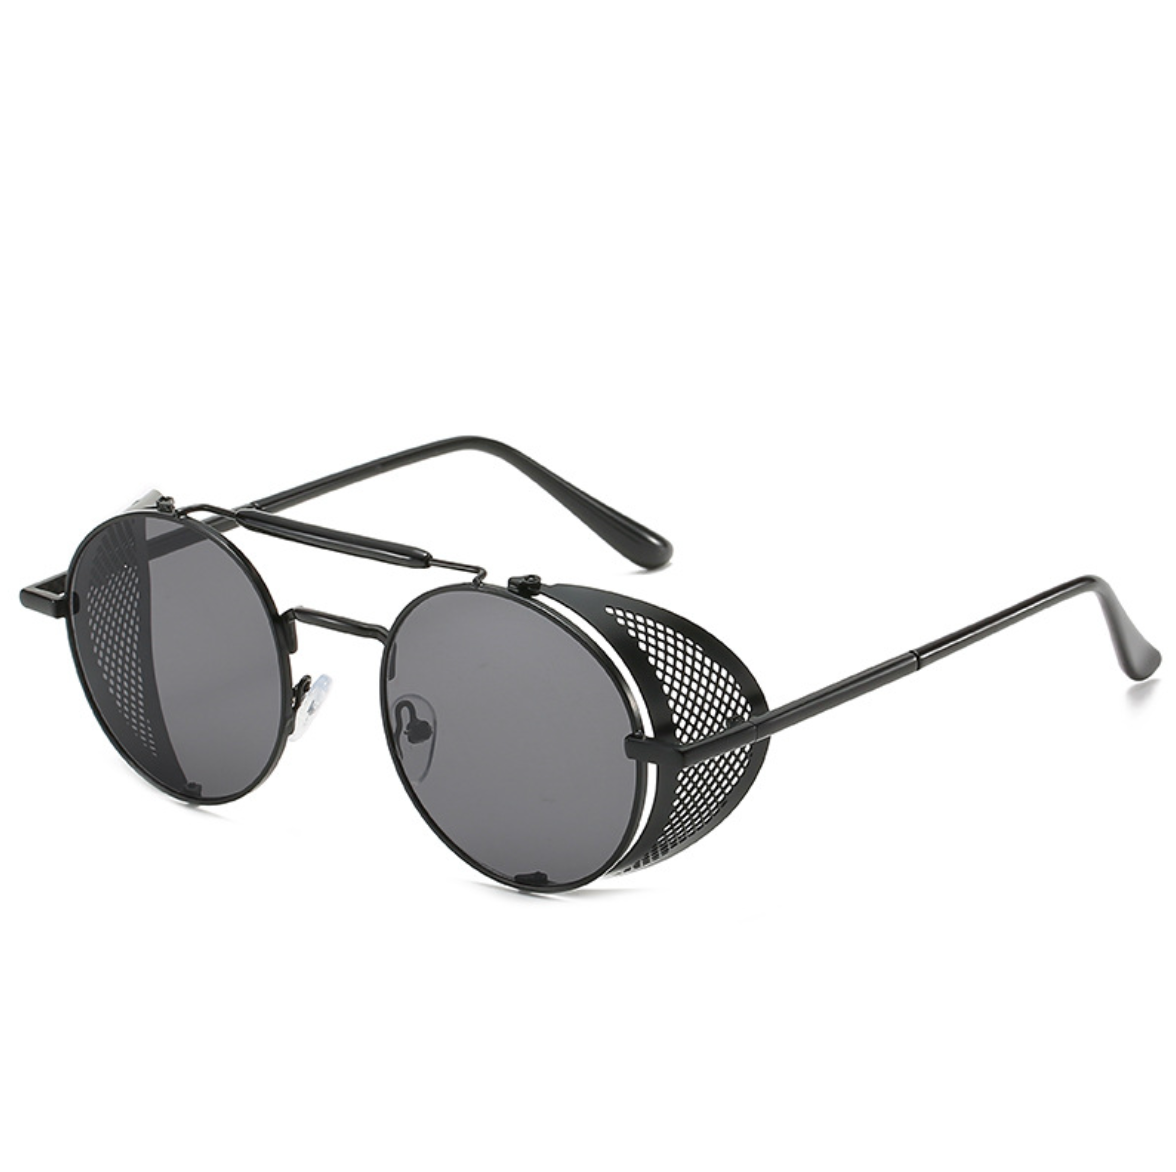 KDEAM Vintage Round Sunglasses Men Women Leather Shield Sun